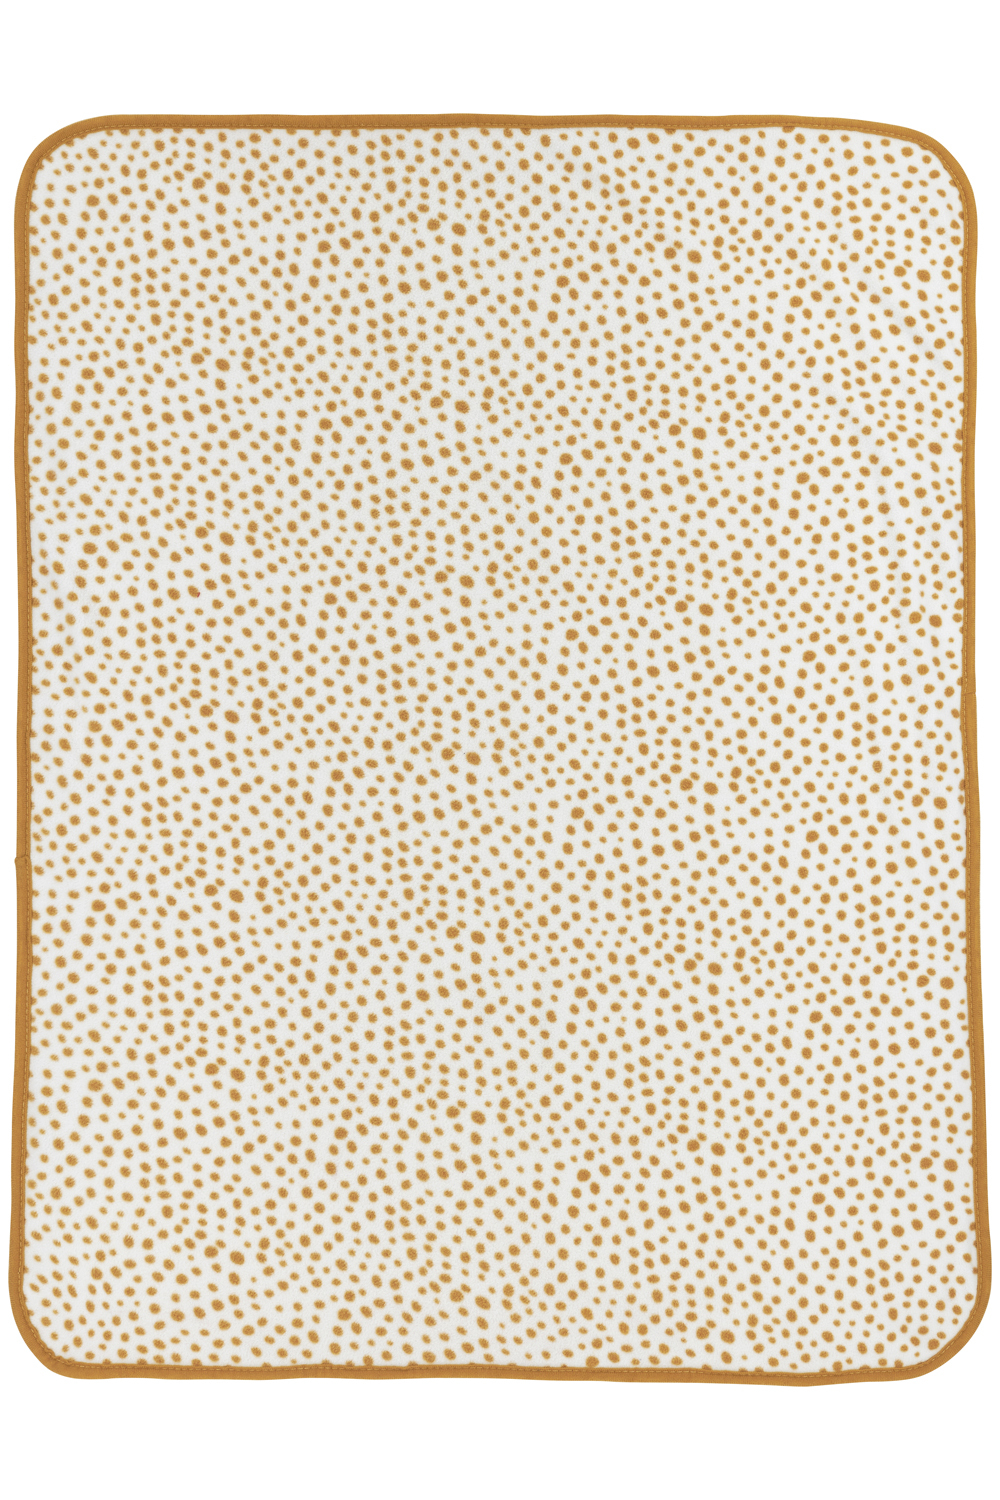 Reisdeken fleece Cheetah - honey gold - 75x100cm